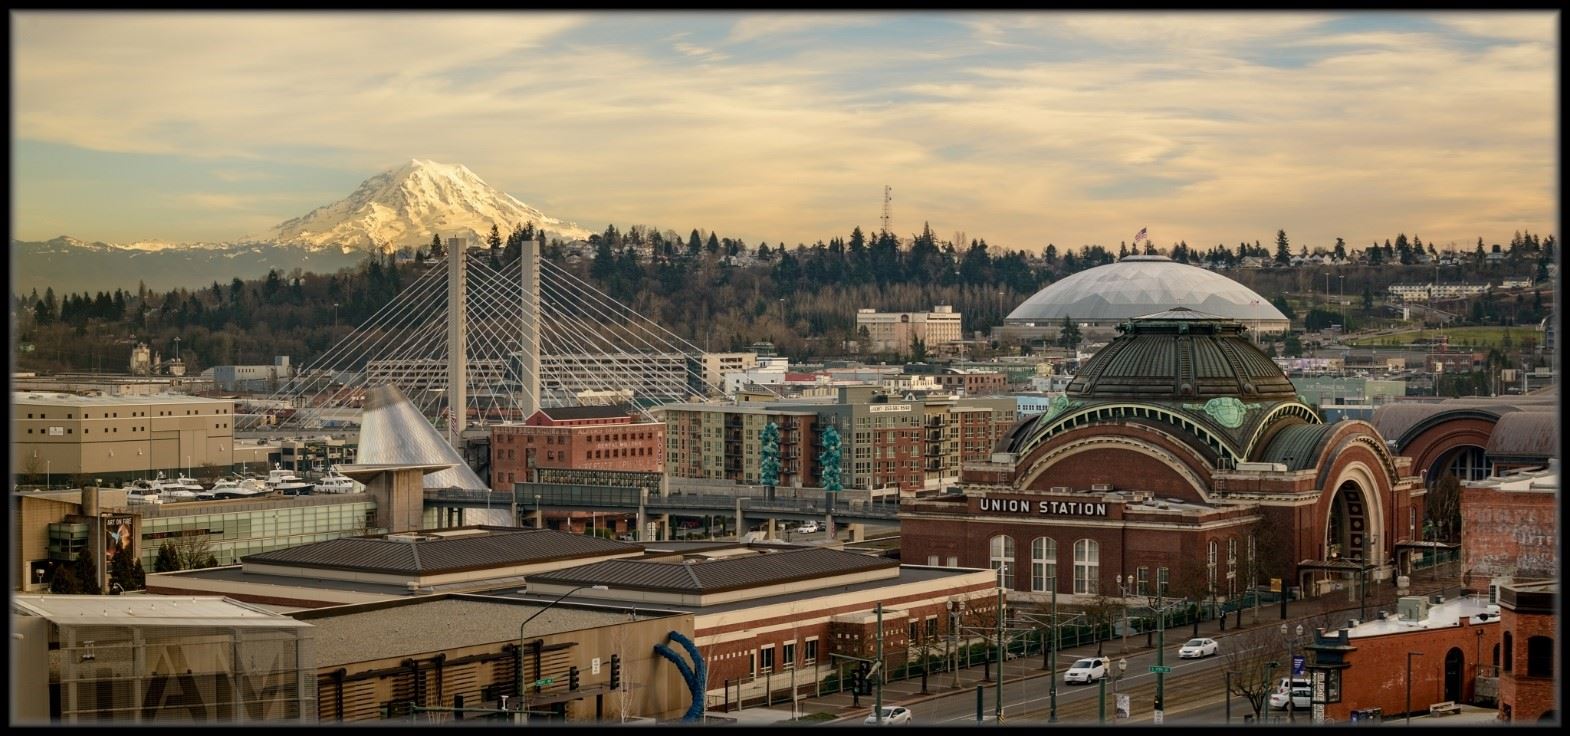 Museum District Downtown Tacoma Photo courtesy of Ernie Misner (https://www.flickr.com/photos/erniemisner/)